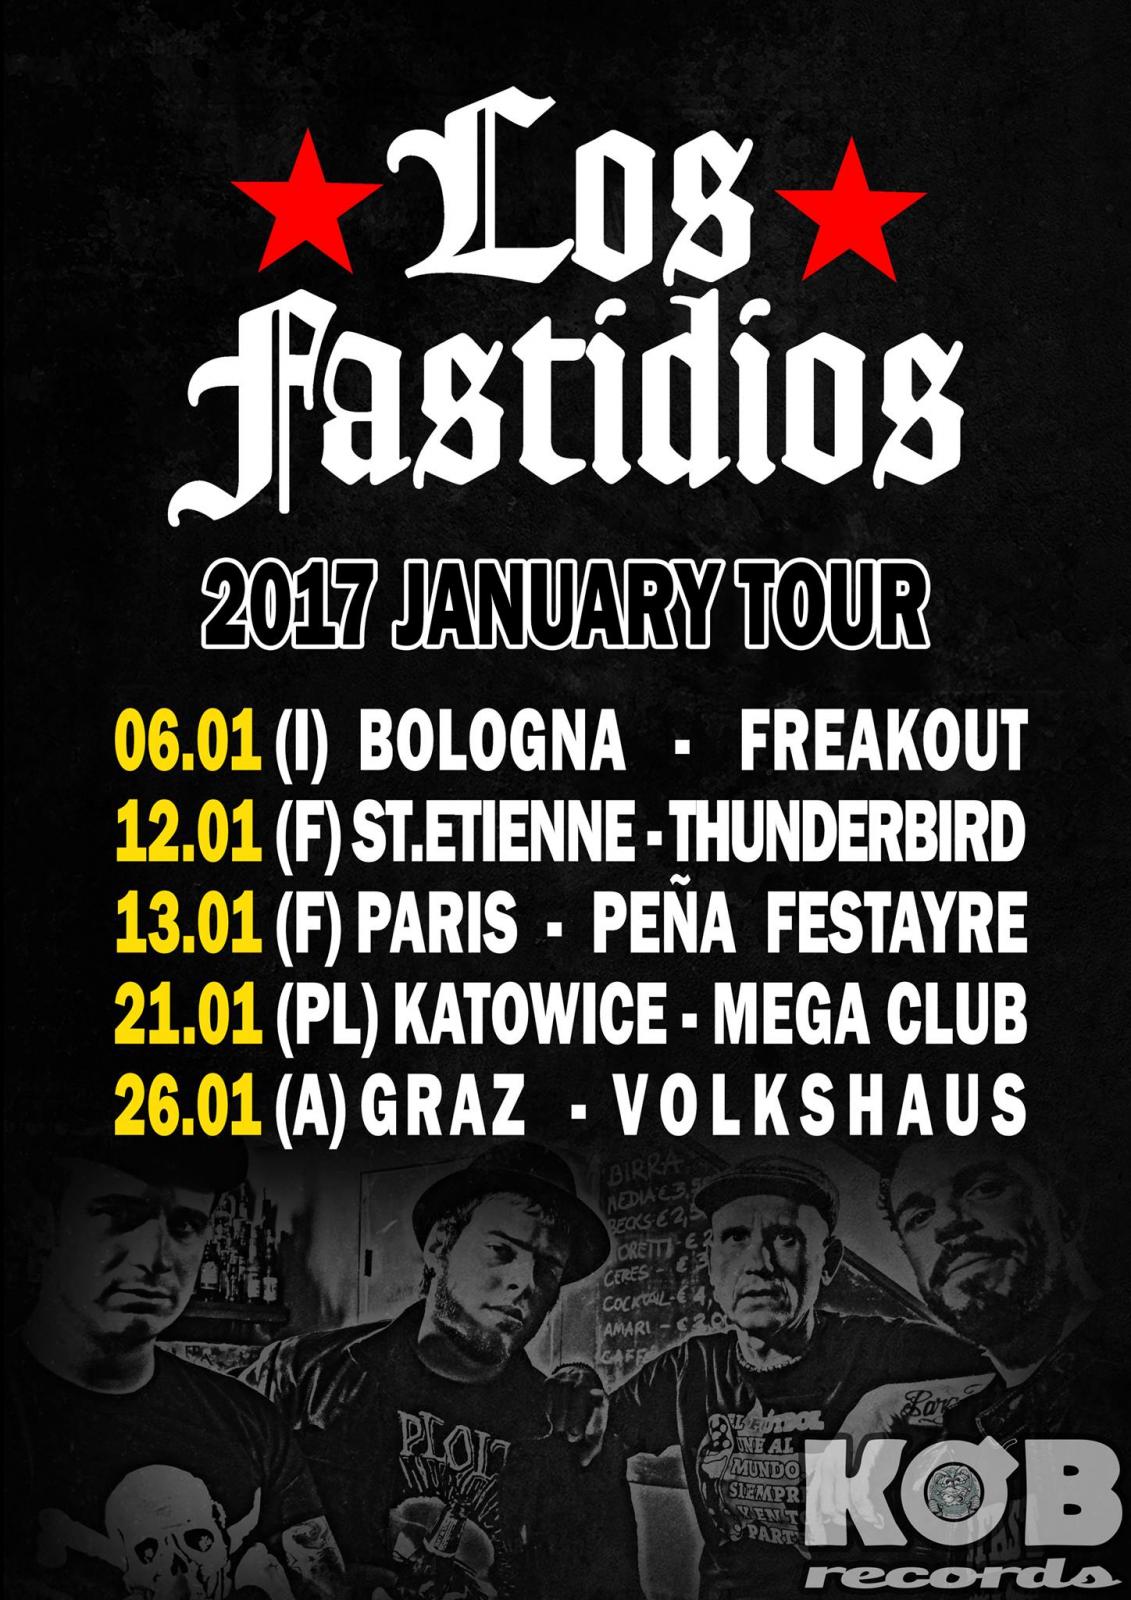 Los-Fastidios-January-2017.jpg